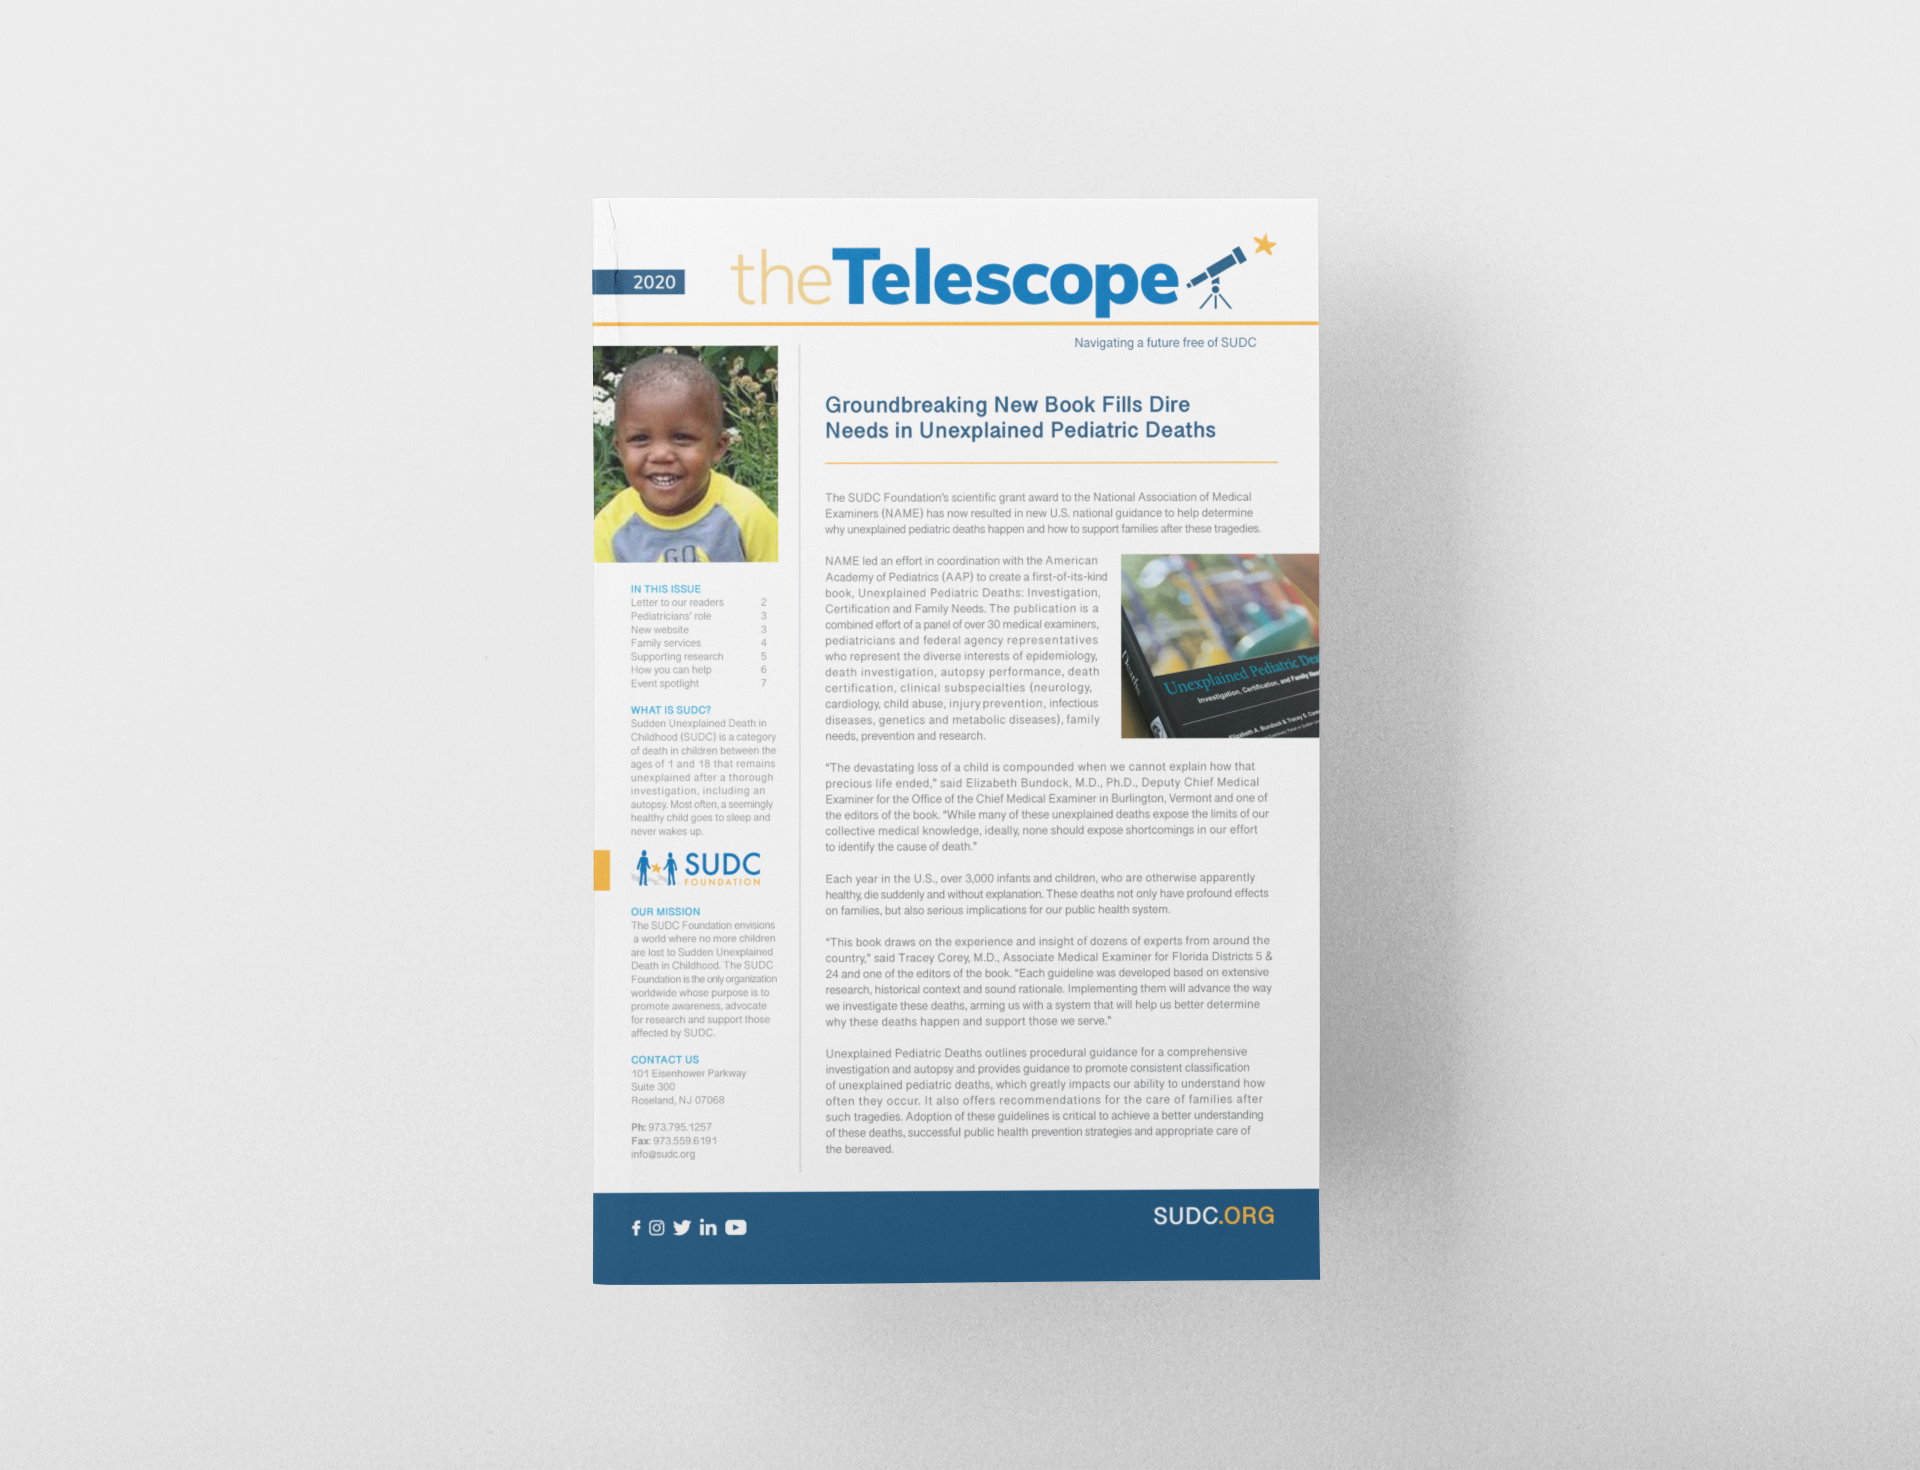 4-SUDC TELESCOPE.png